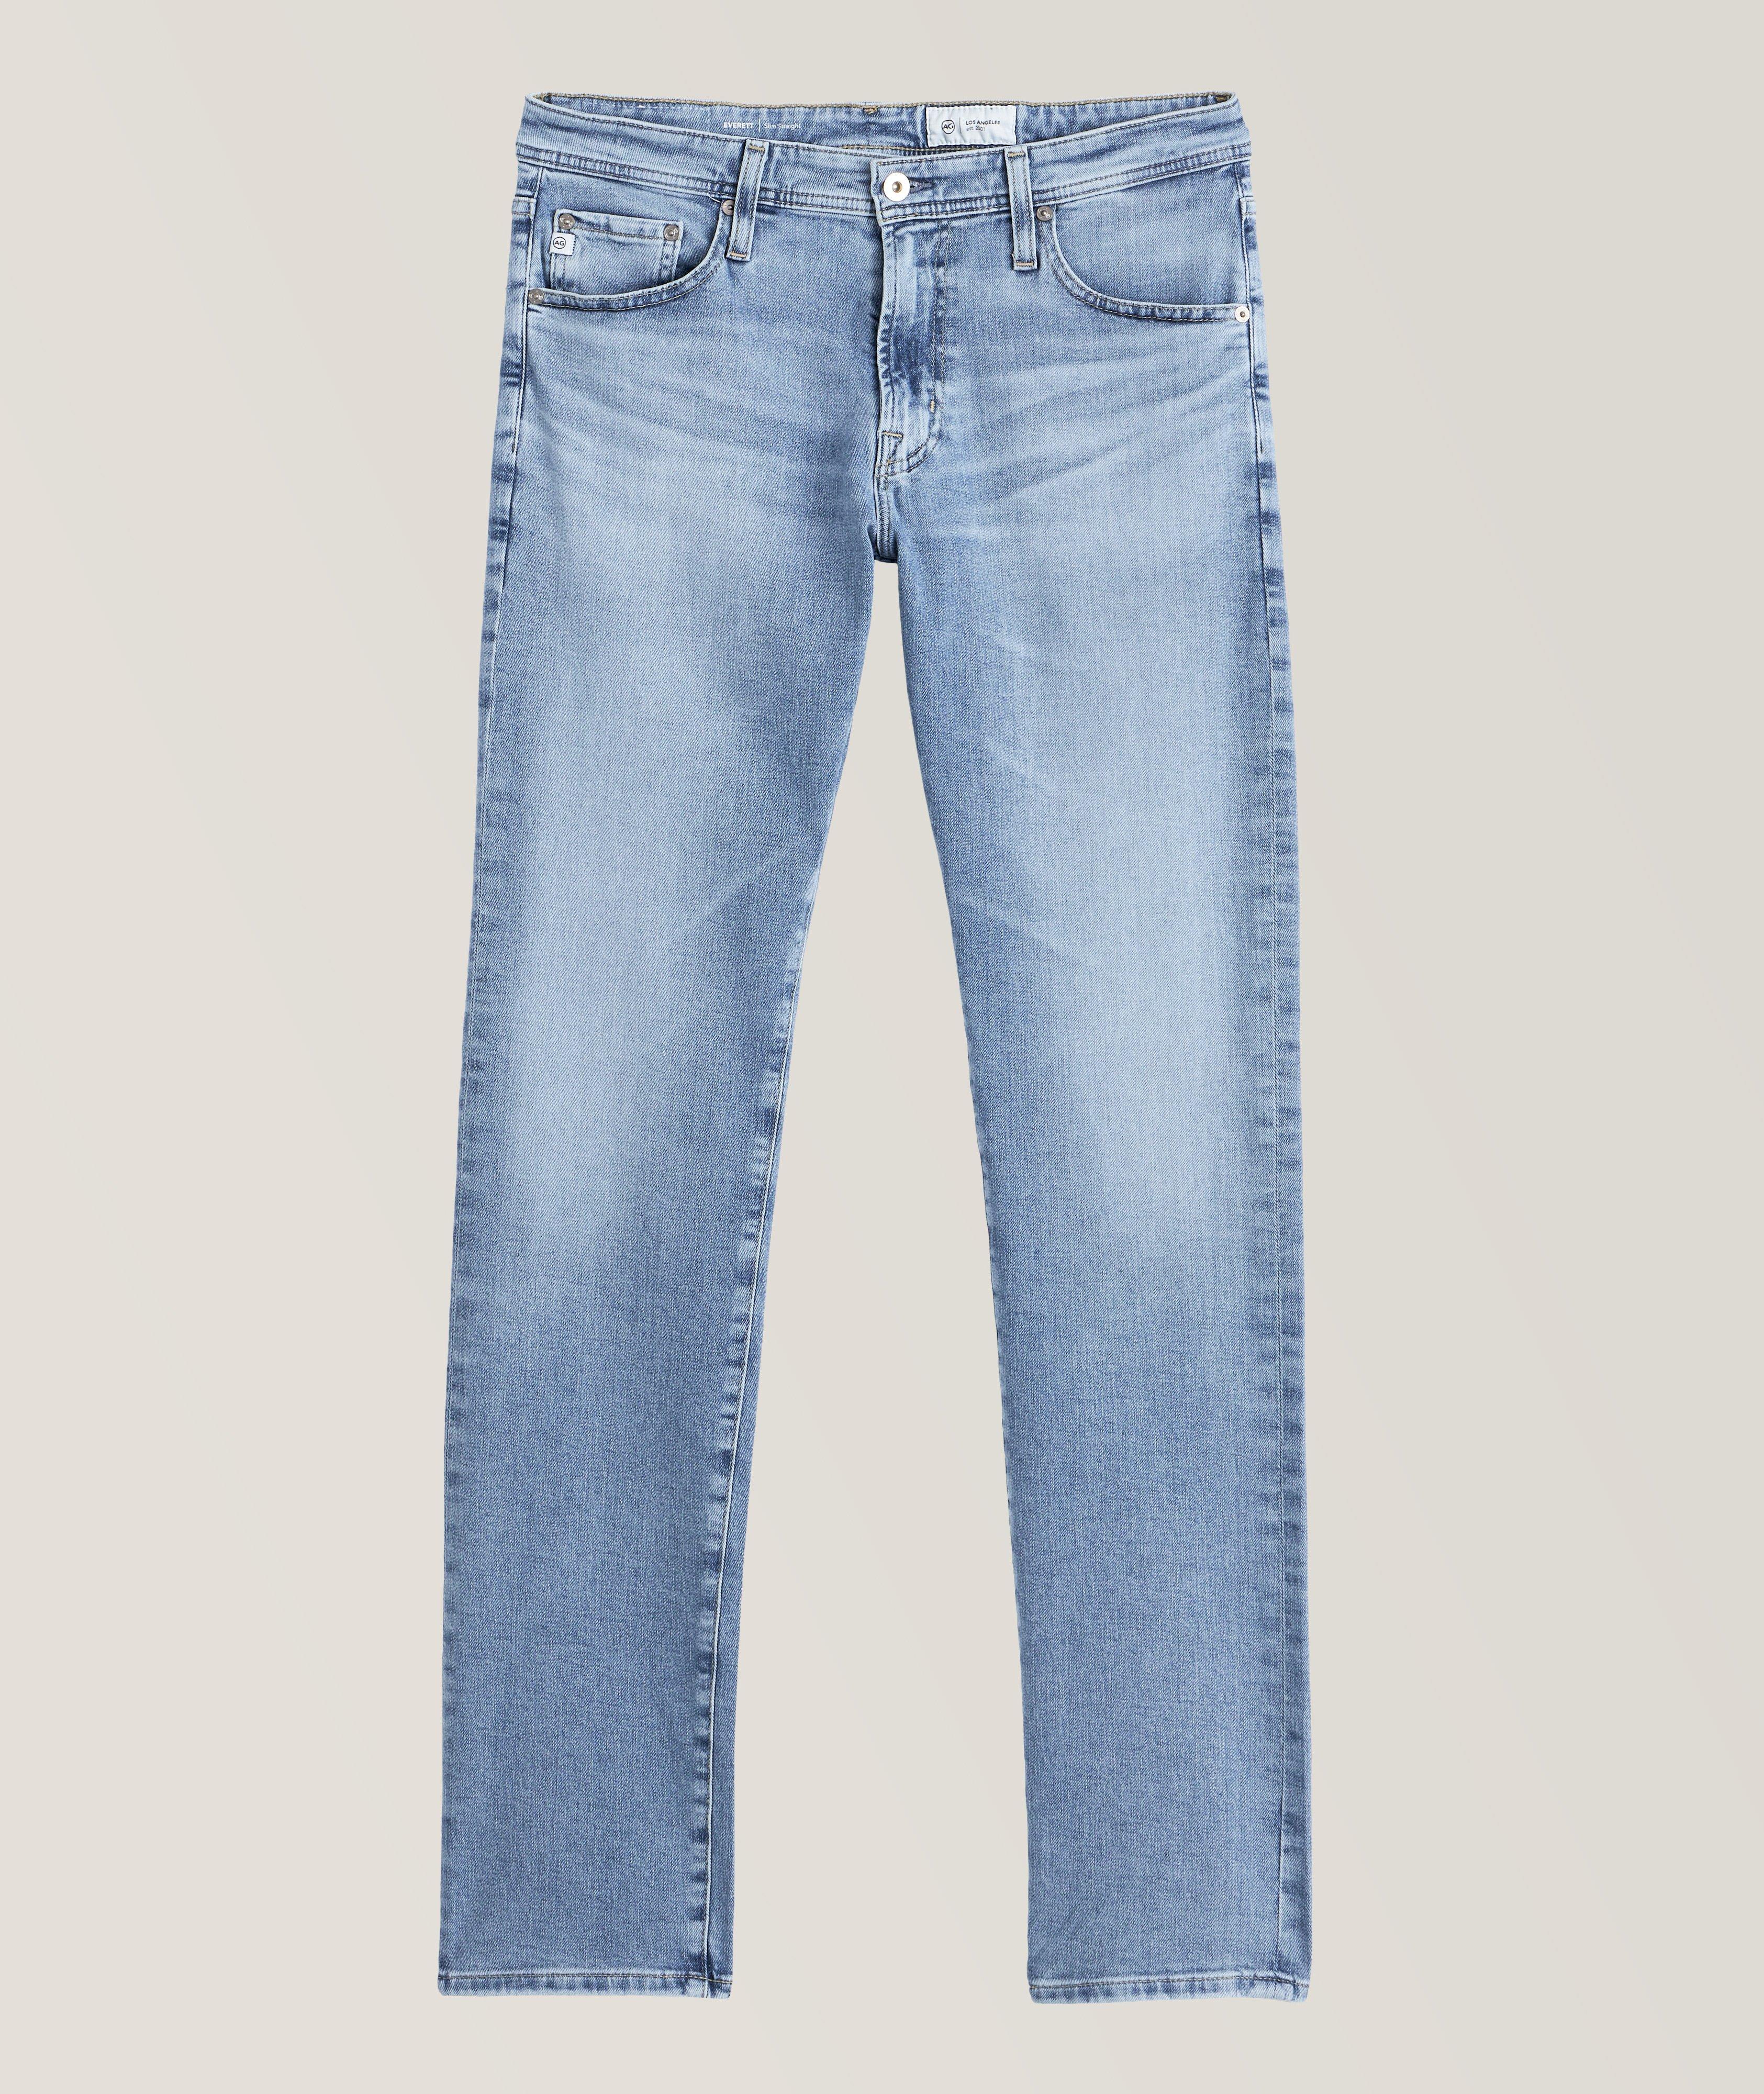 Everett Slim-Straight Cotton Blend Jeans image 0